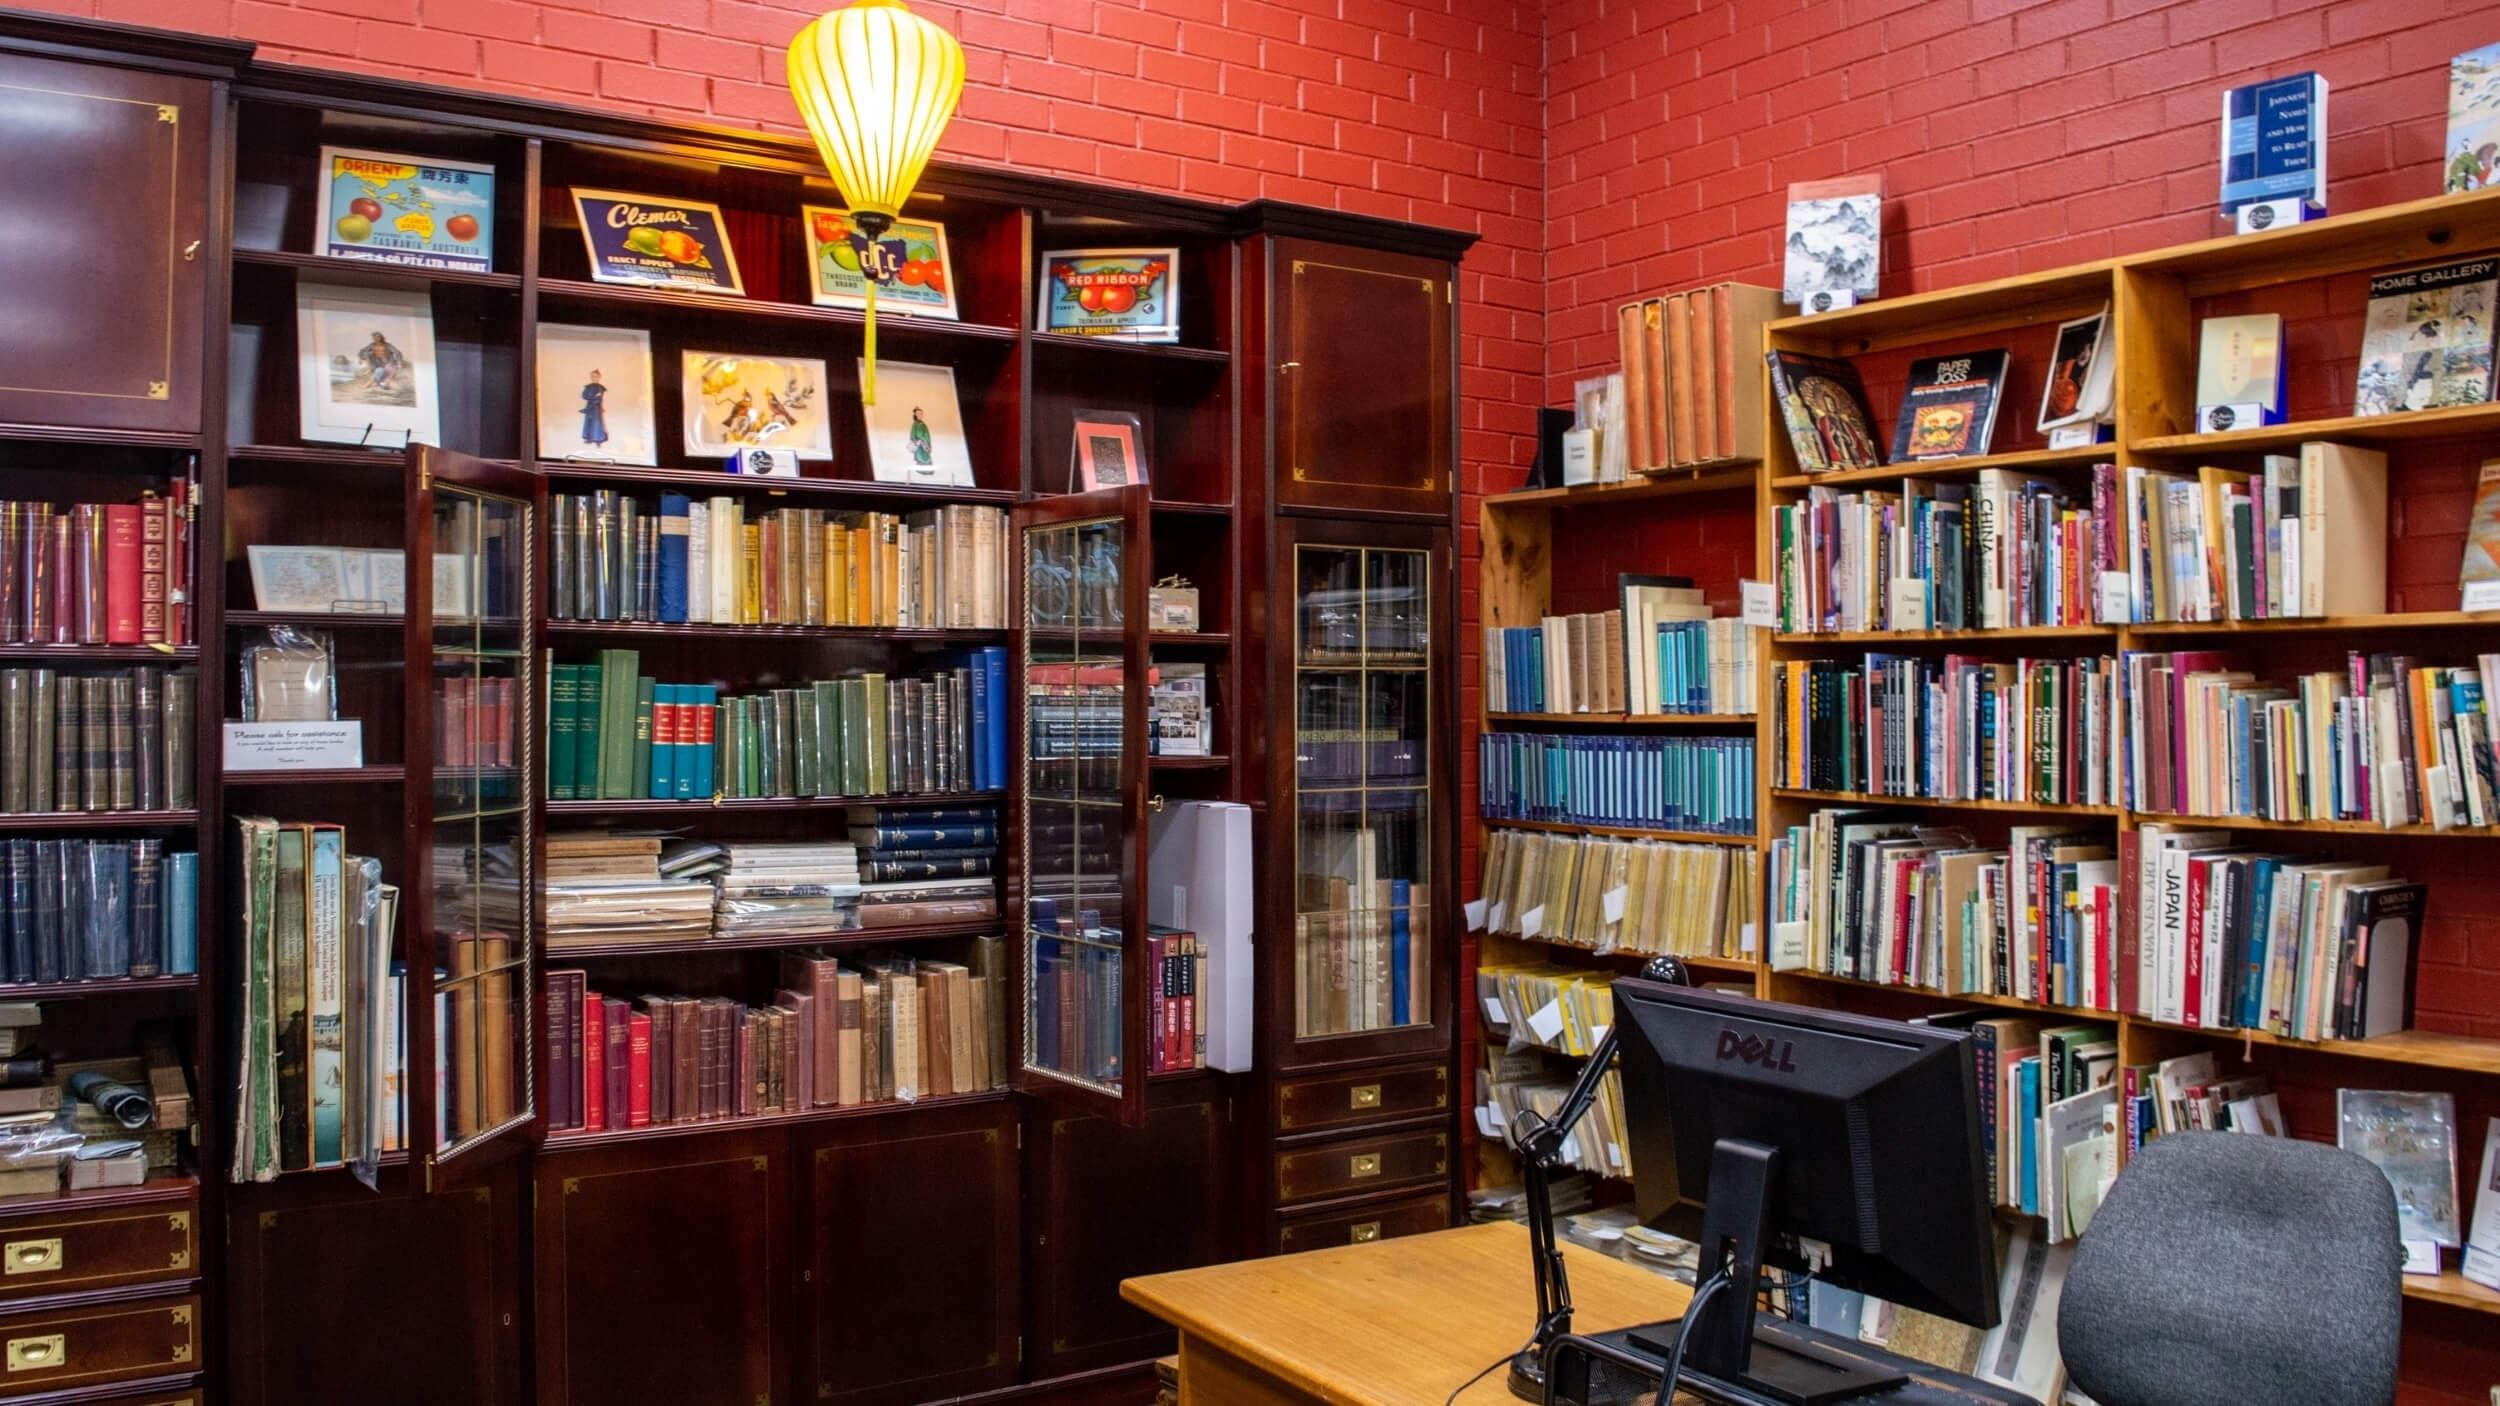 Asia Bookroom shop photo